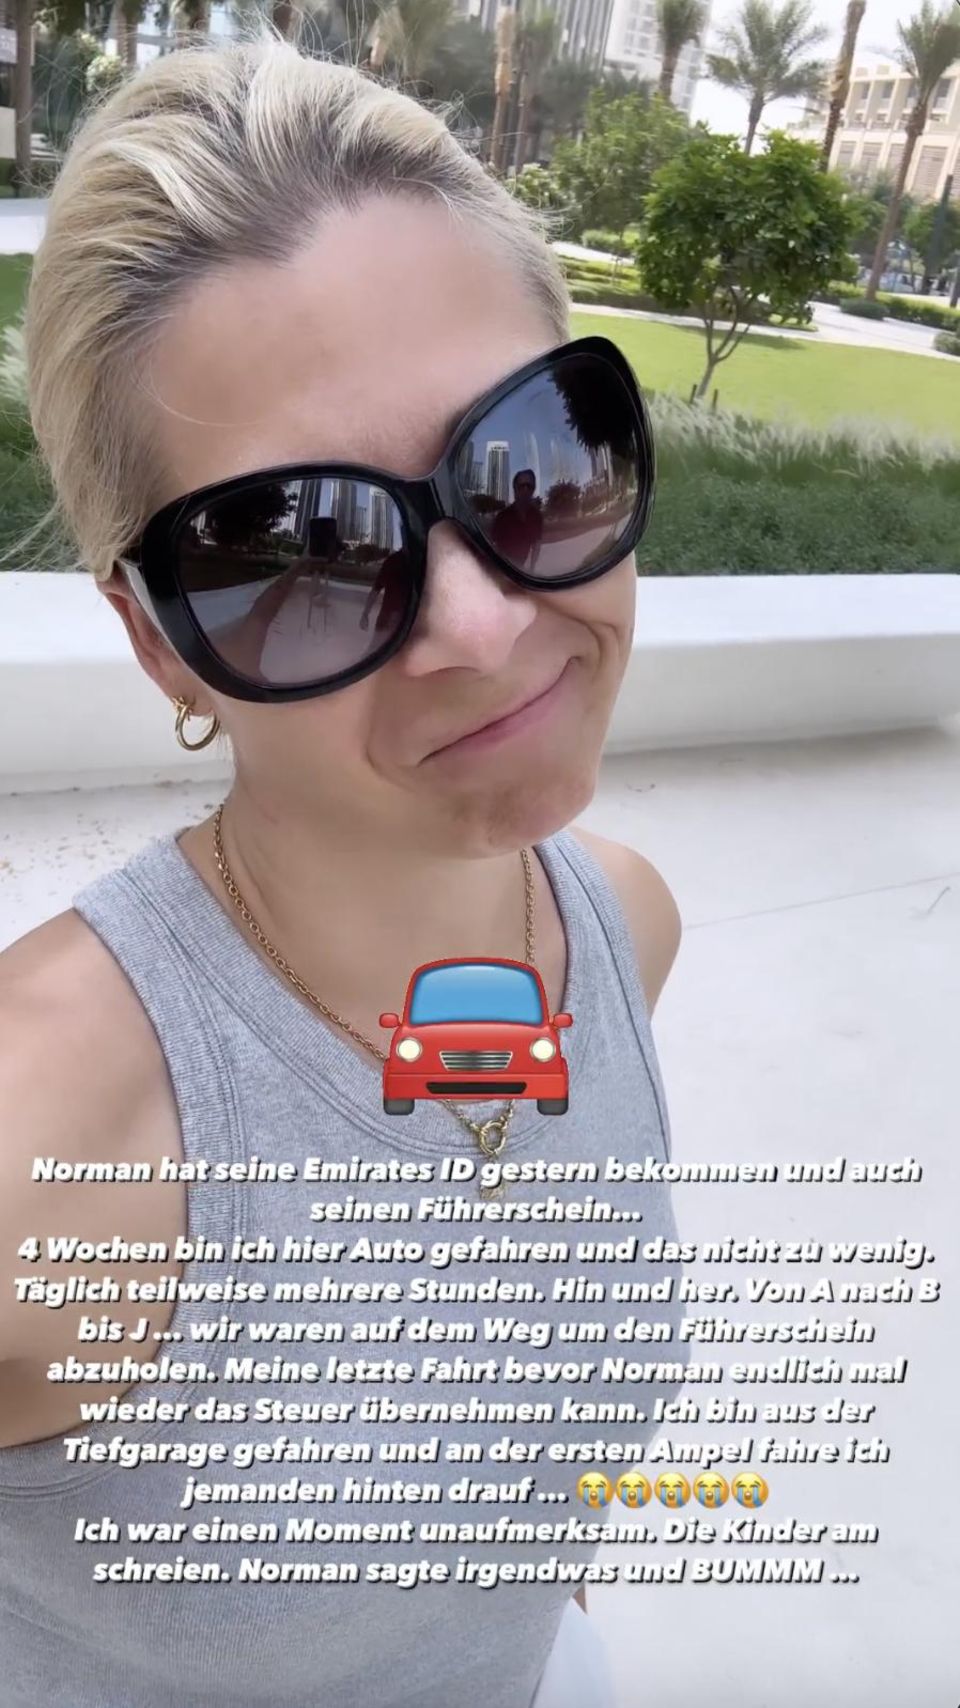 Tanja Szewczenko tells her fans about her car accident.